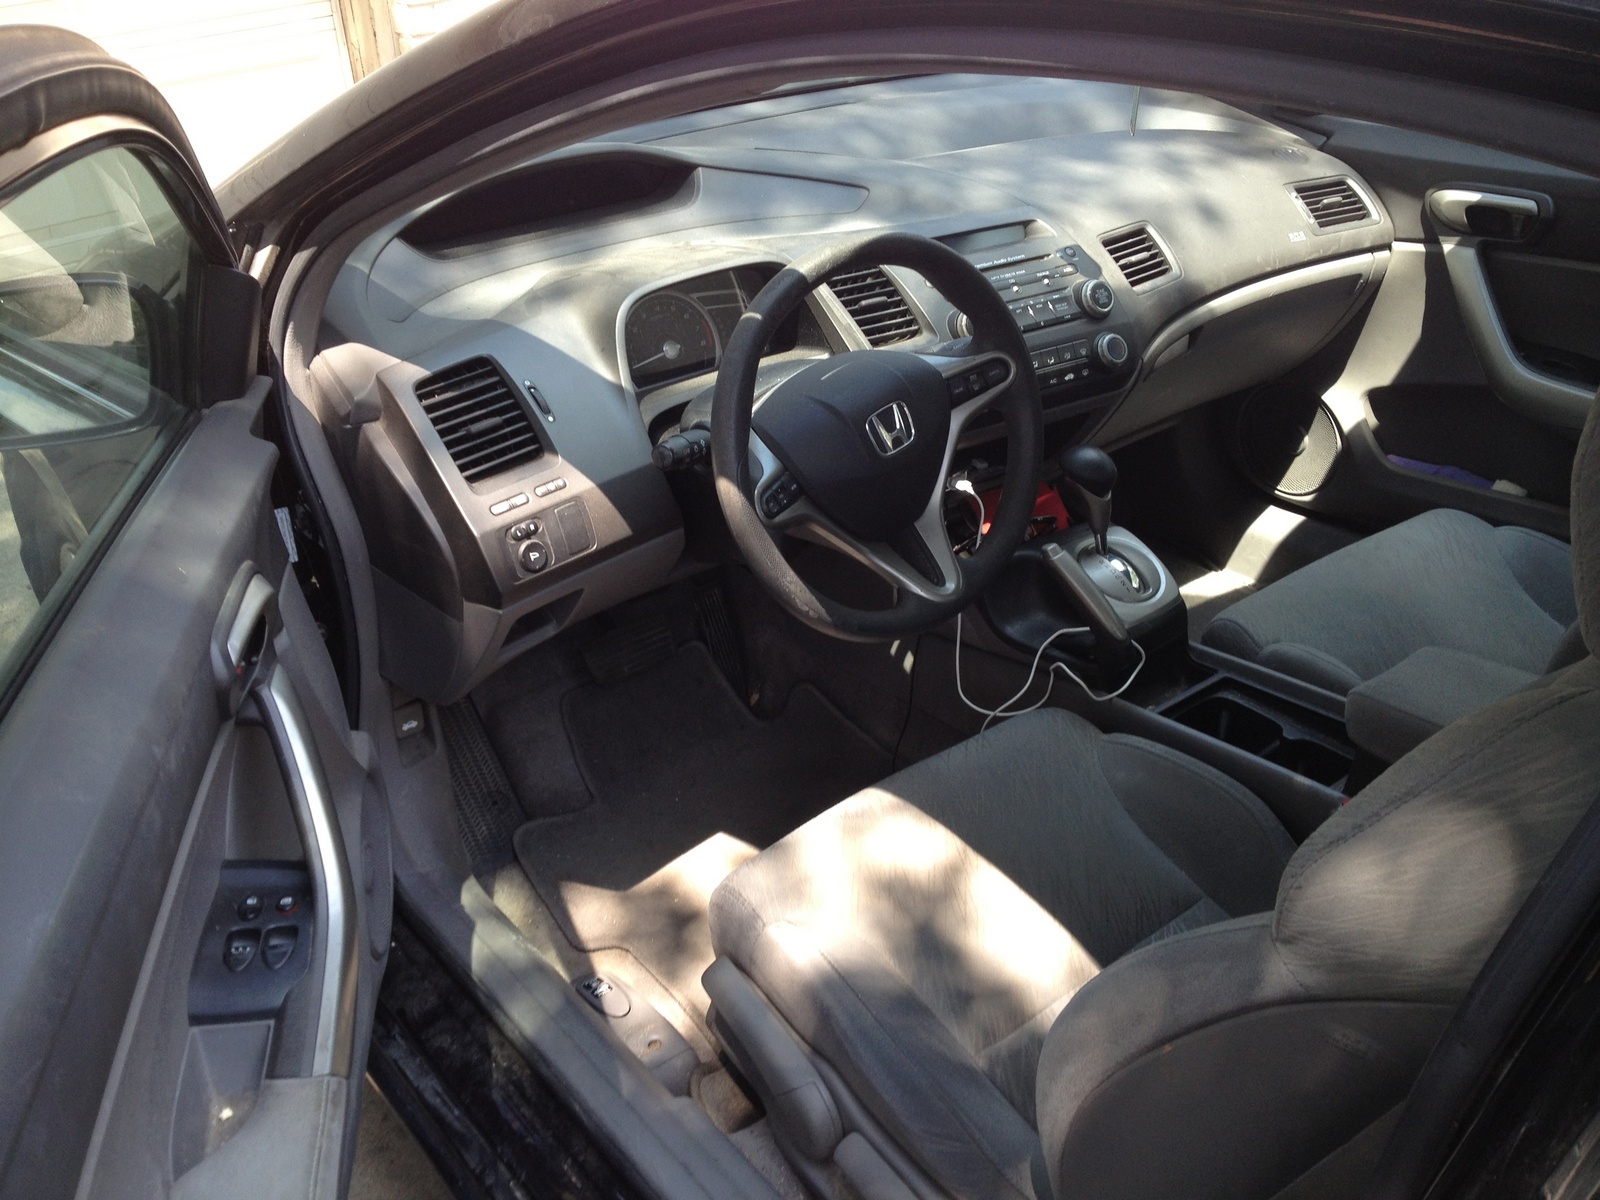 Honda civic coupe 2007 interior #2